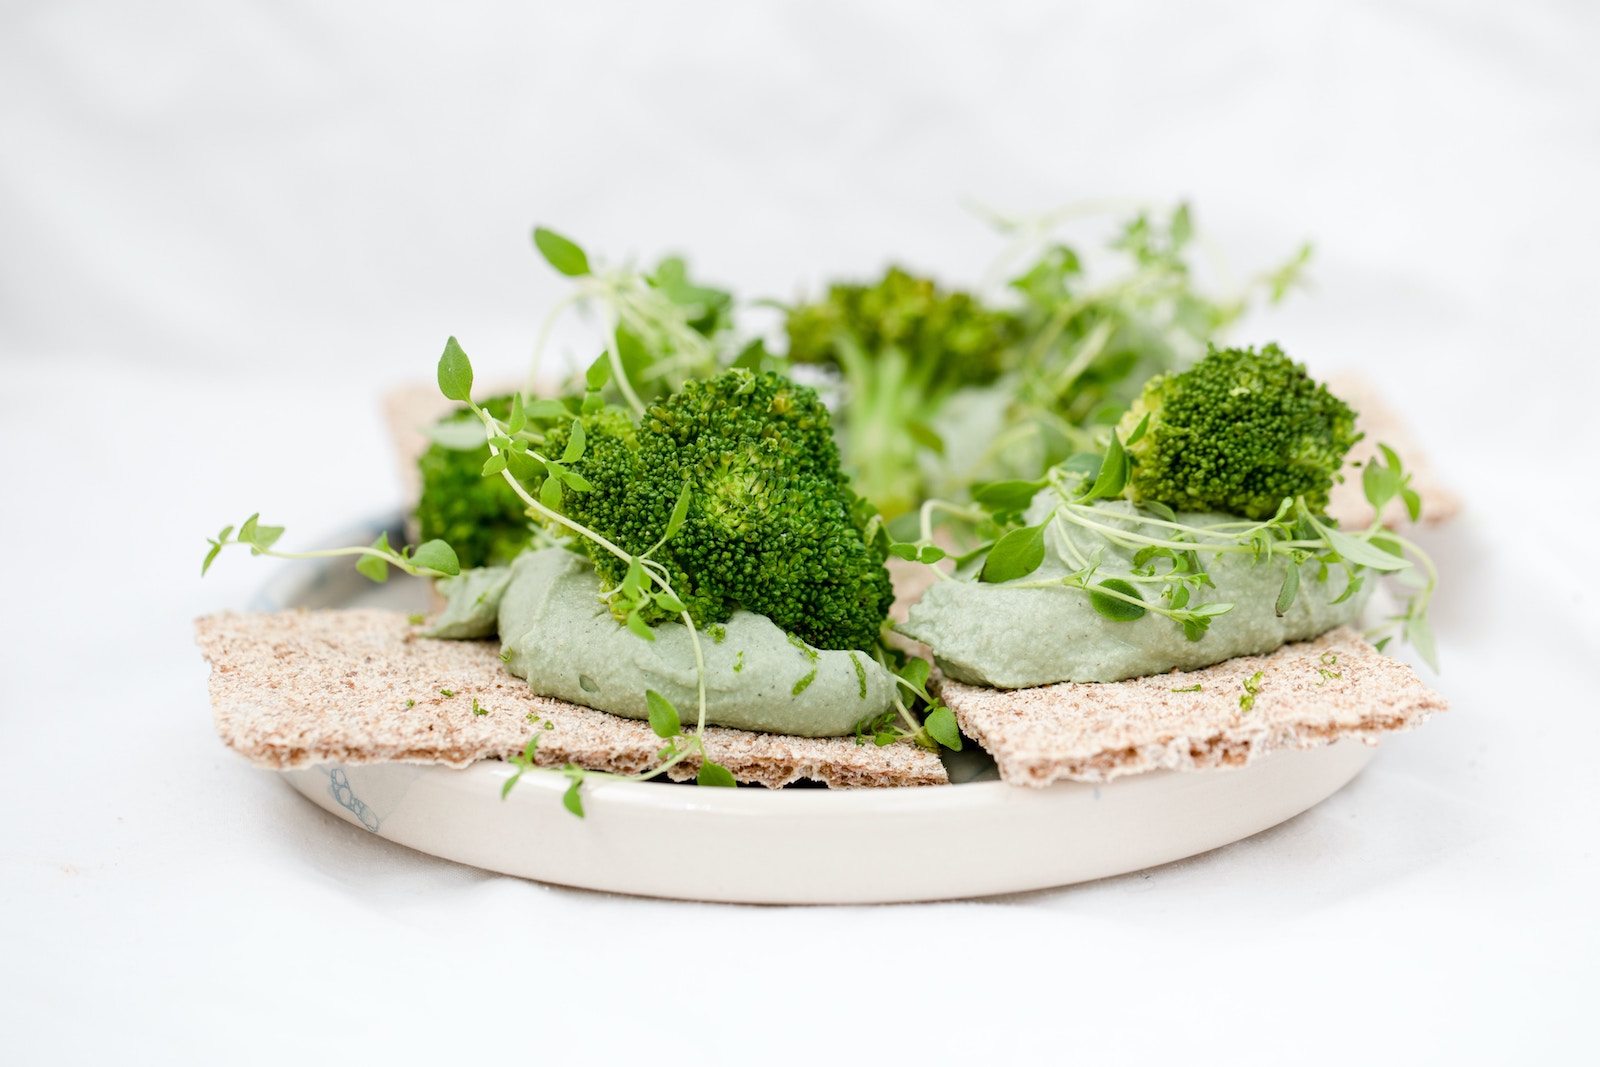 Foods of the Future: Seaweed and Micro-Algae